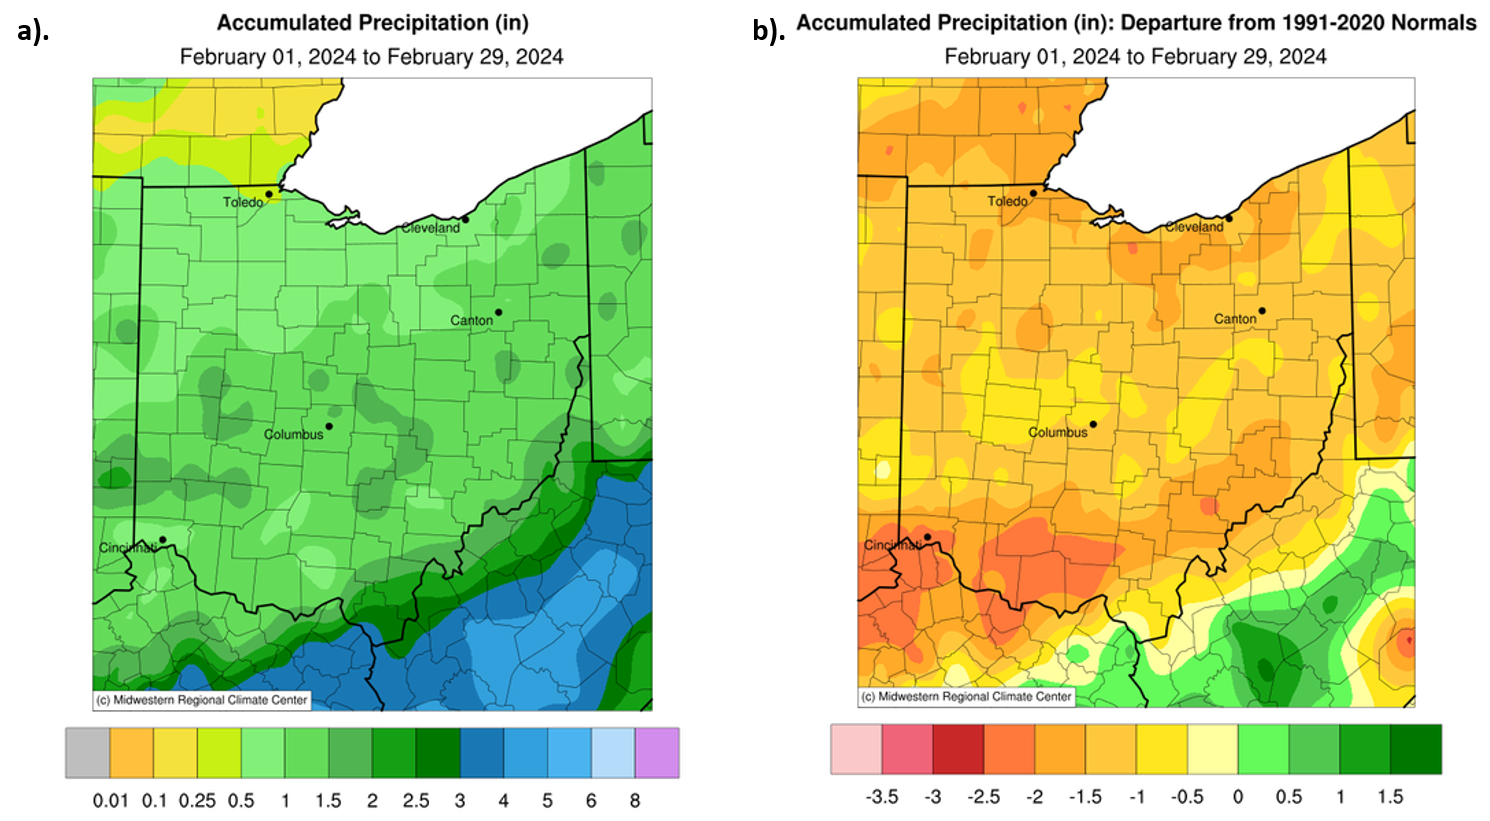 Accumulated precipitation and accumulated precipitation departures for Ohio in February 2024.